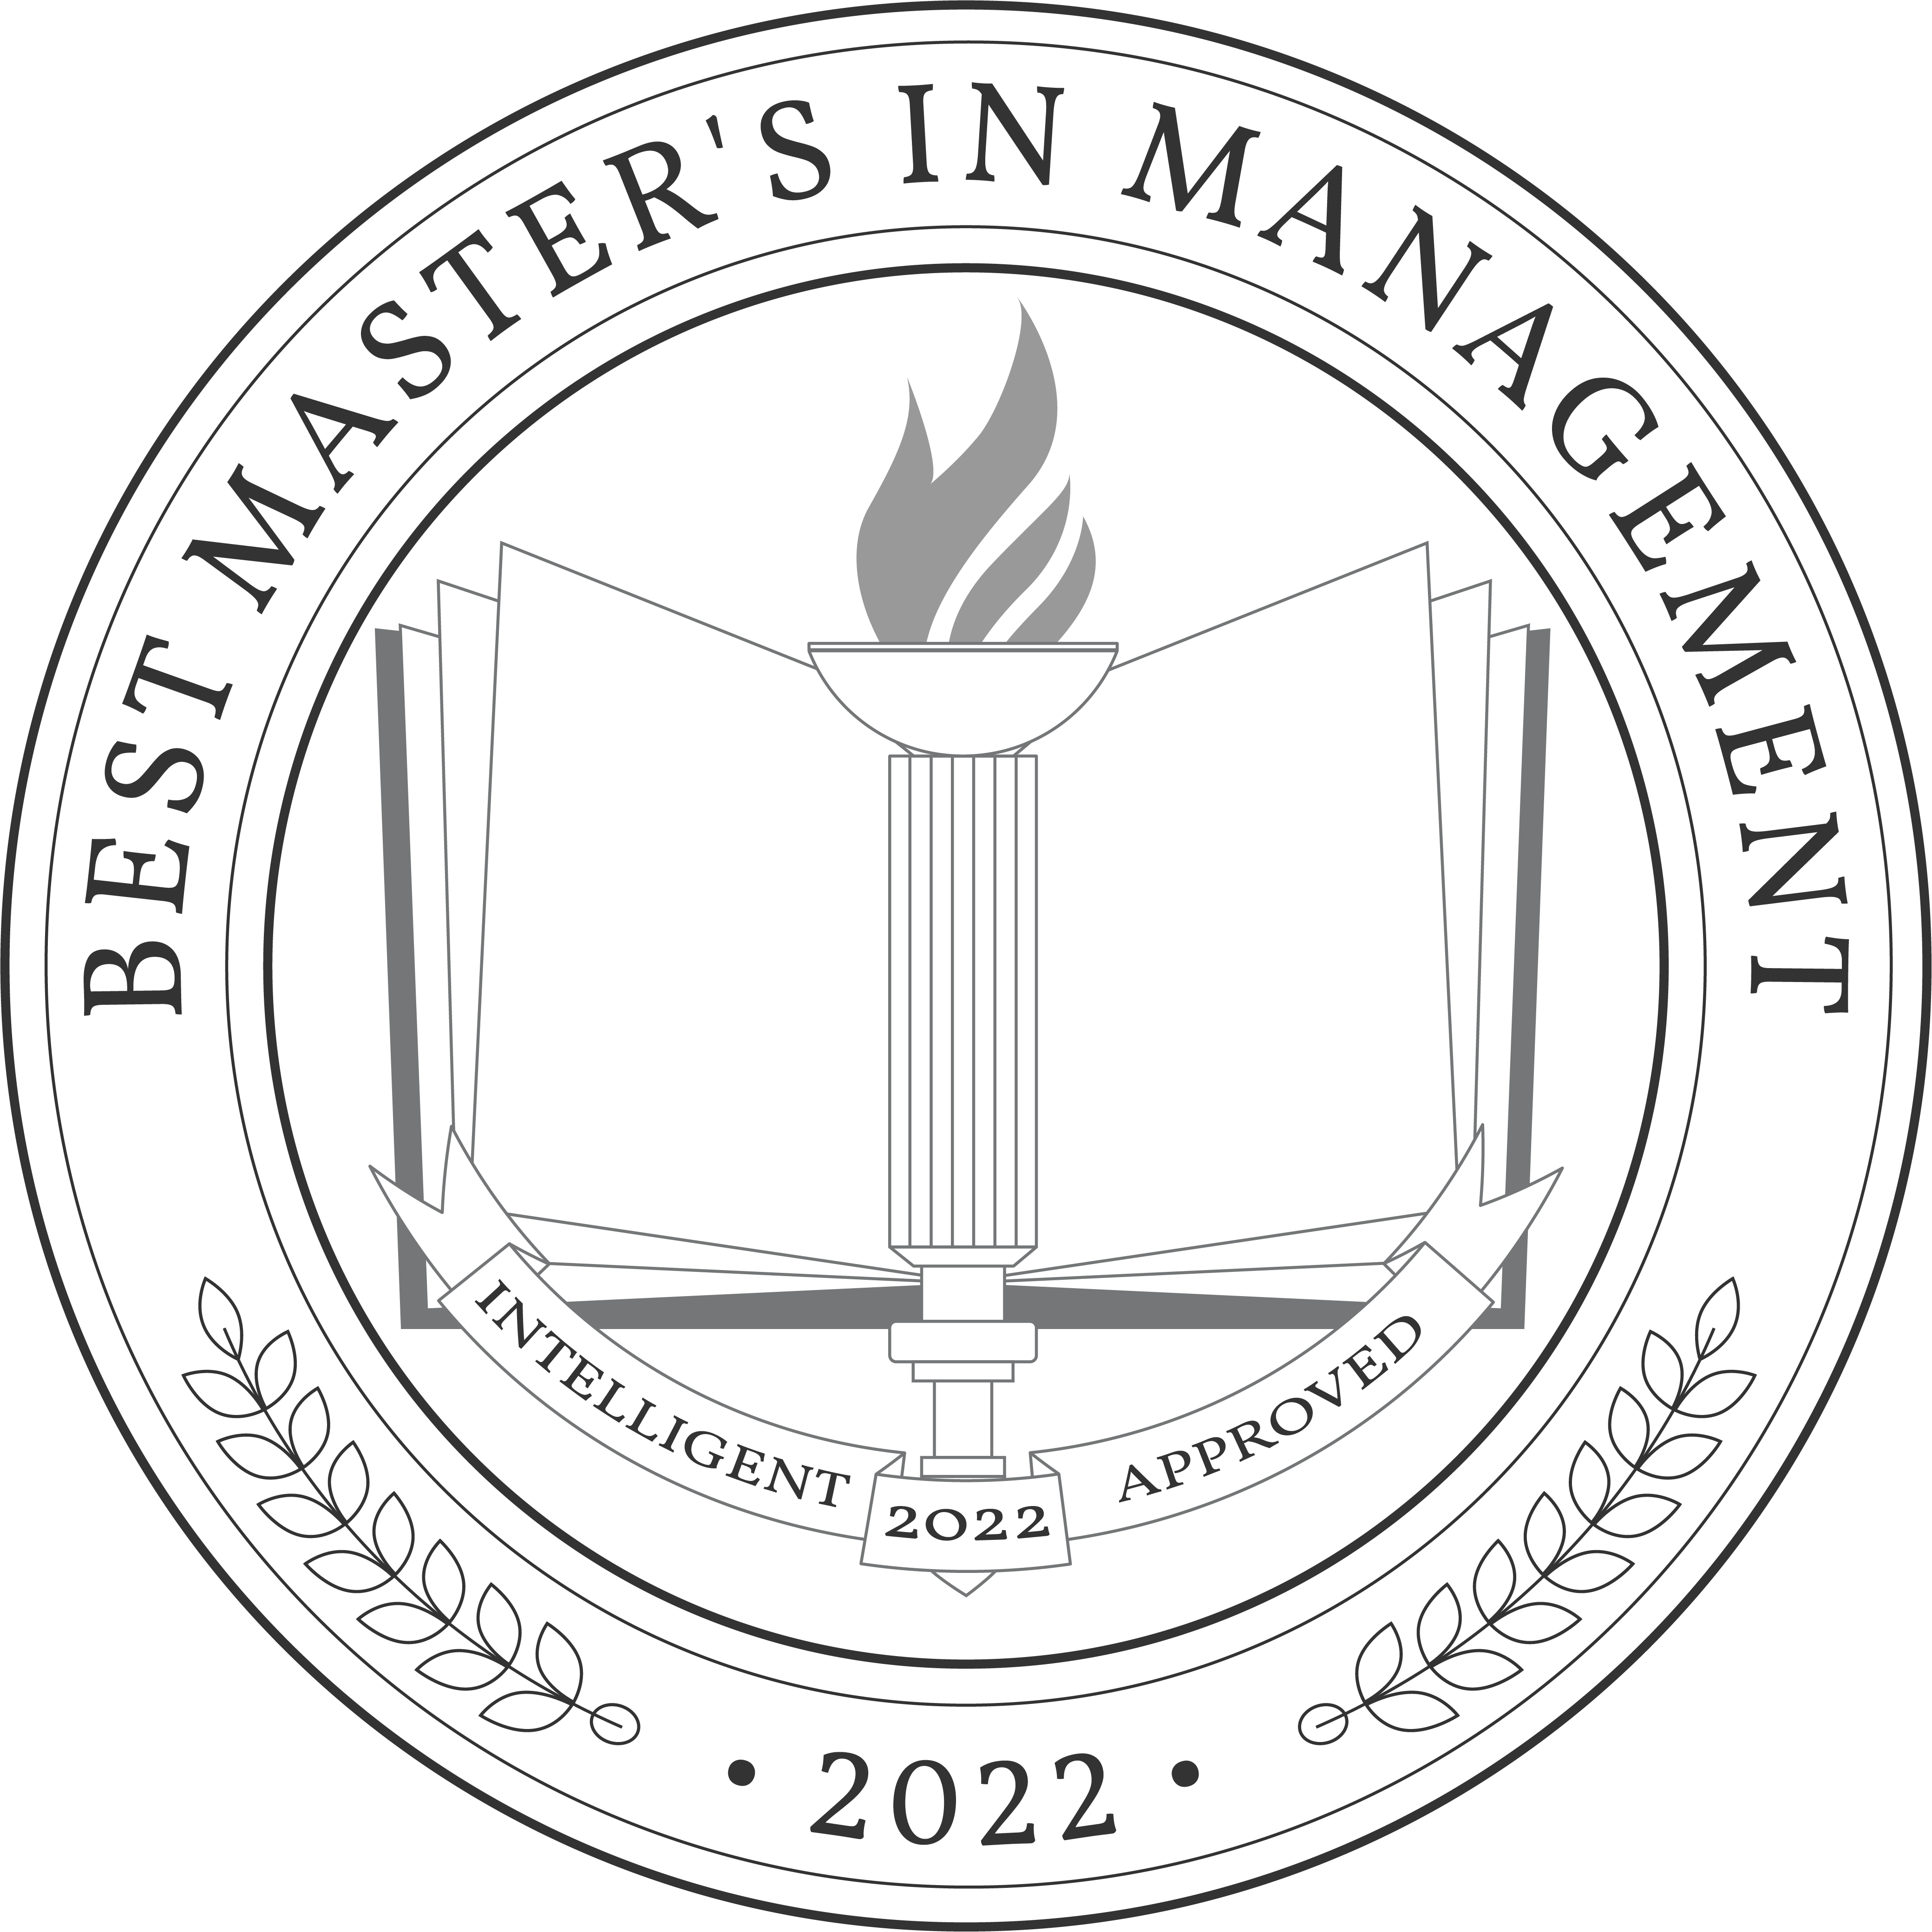 Best Master's in Management Degree Programs